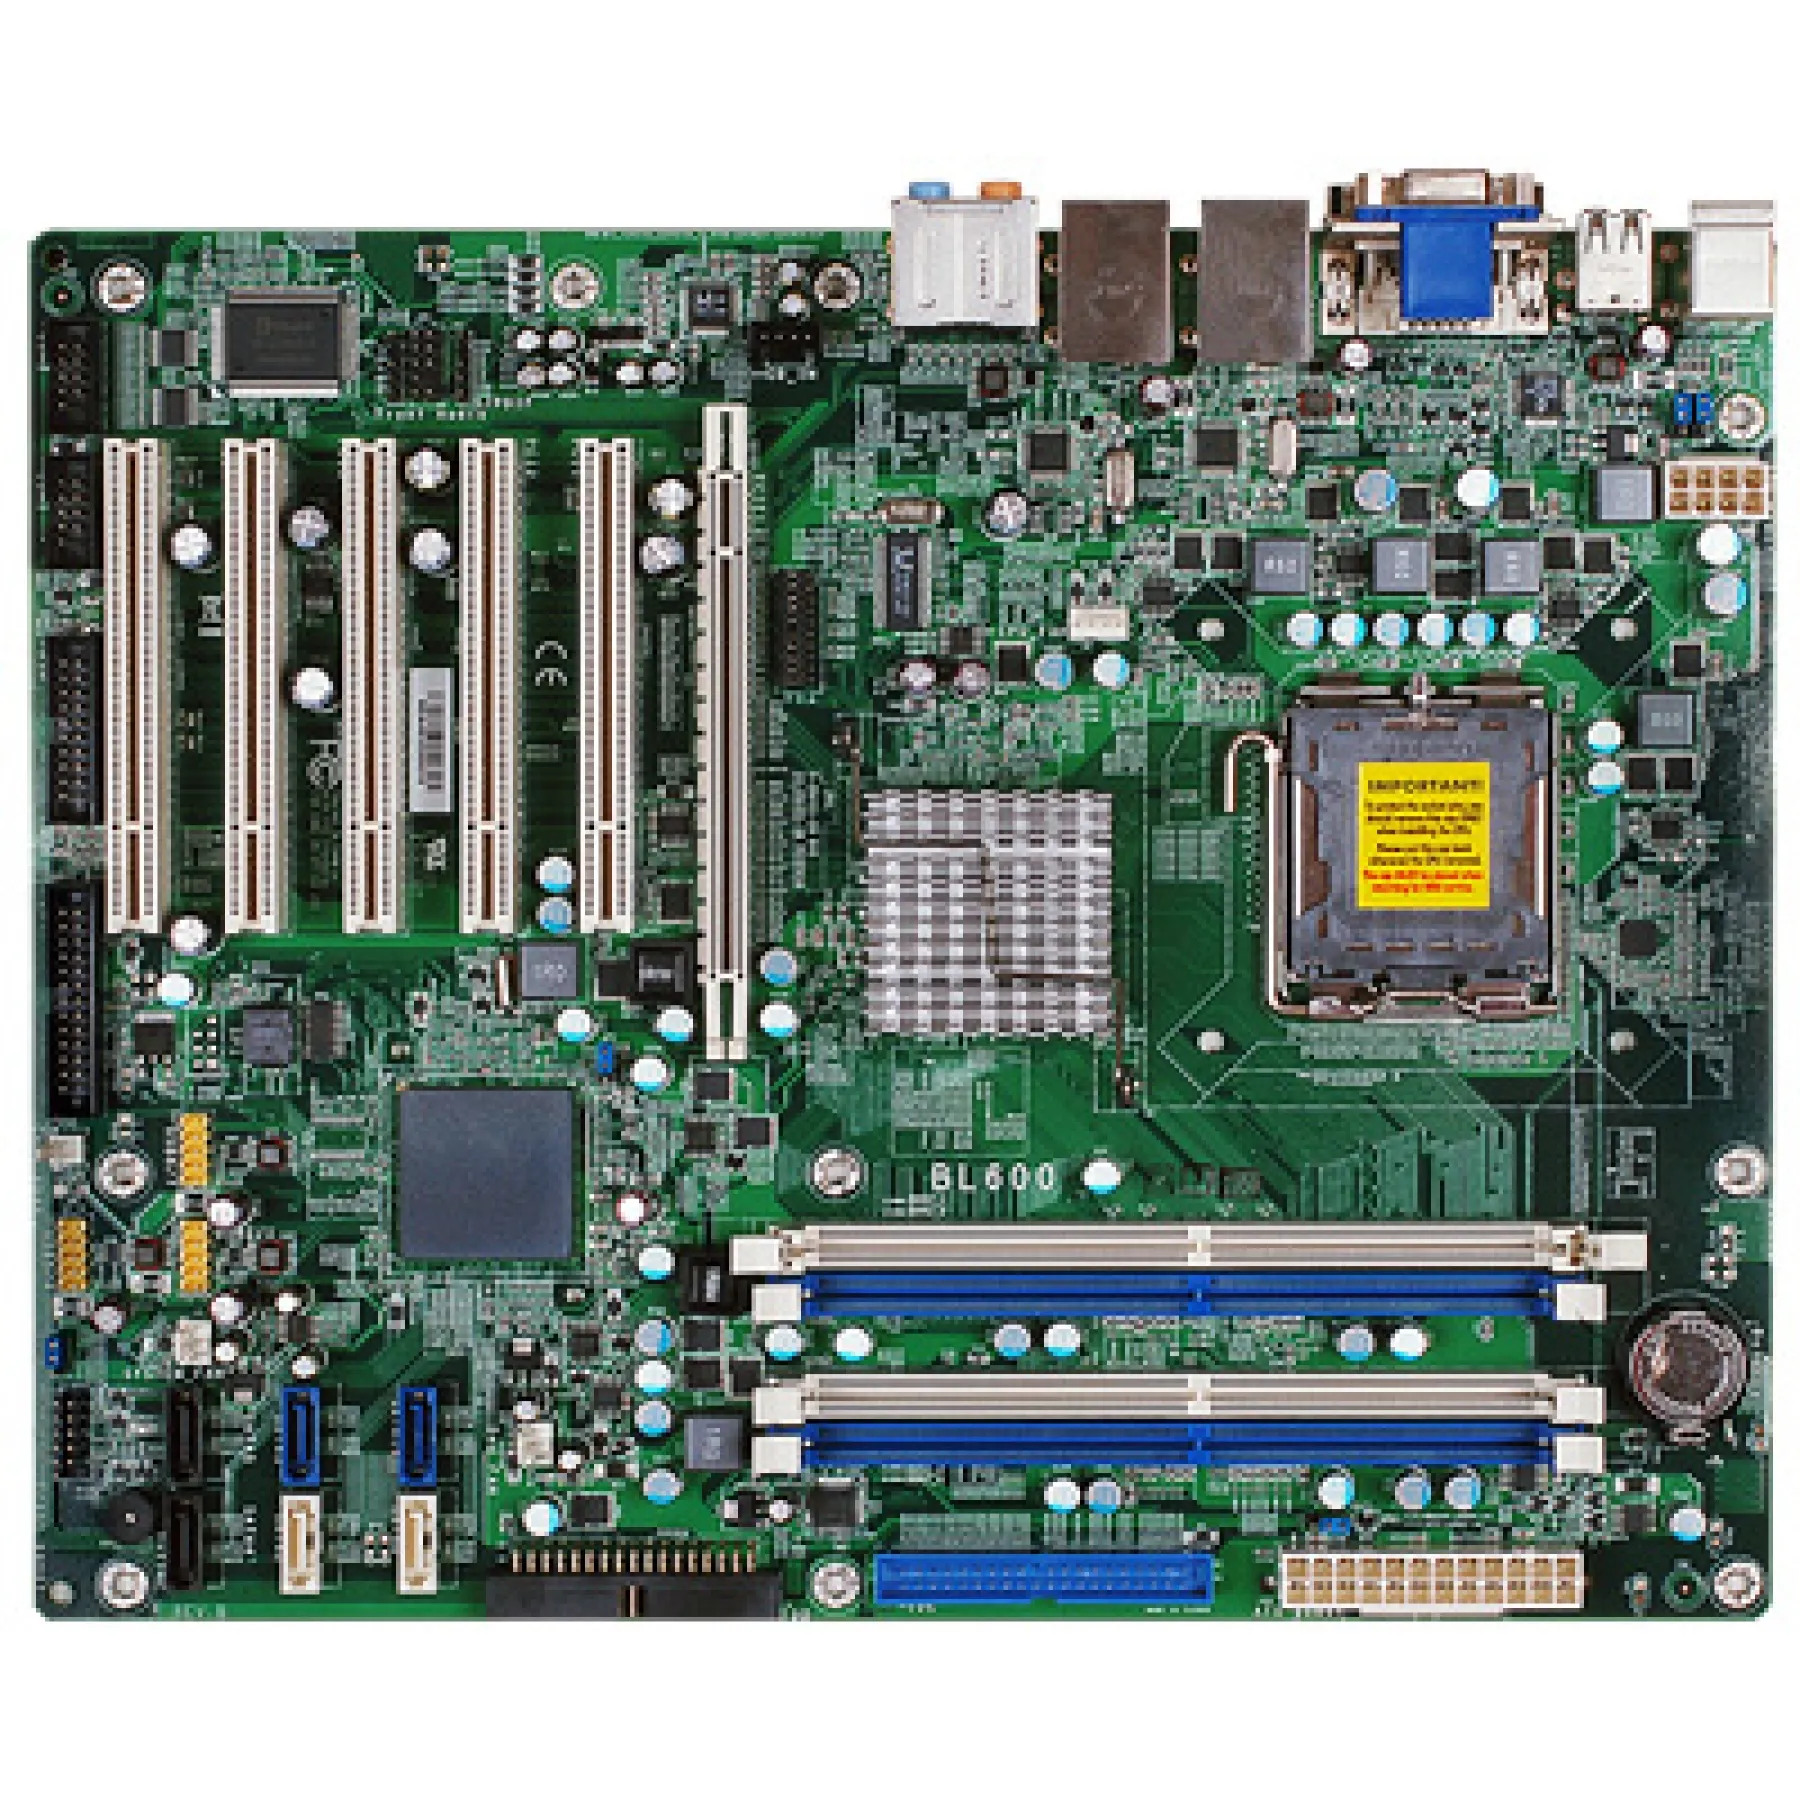 DFI | BL600-DR | ATX Intel Q35 Core 2 Quad/Duo with 1 PCIe[x16] & 5 PCI